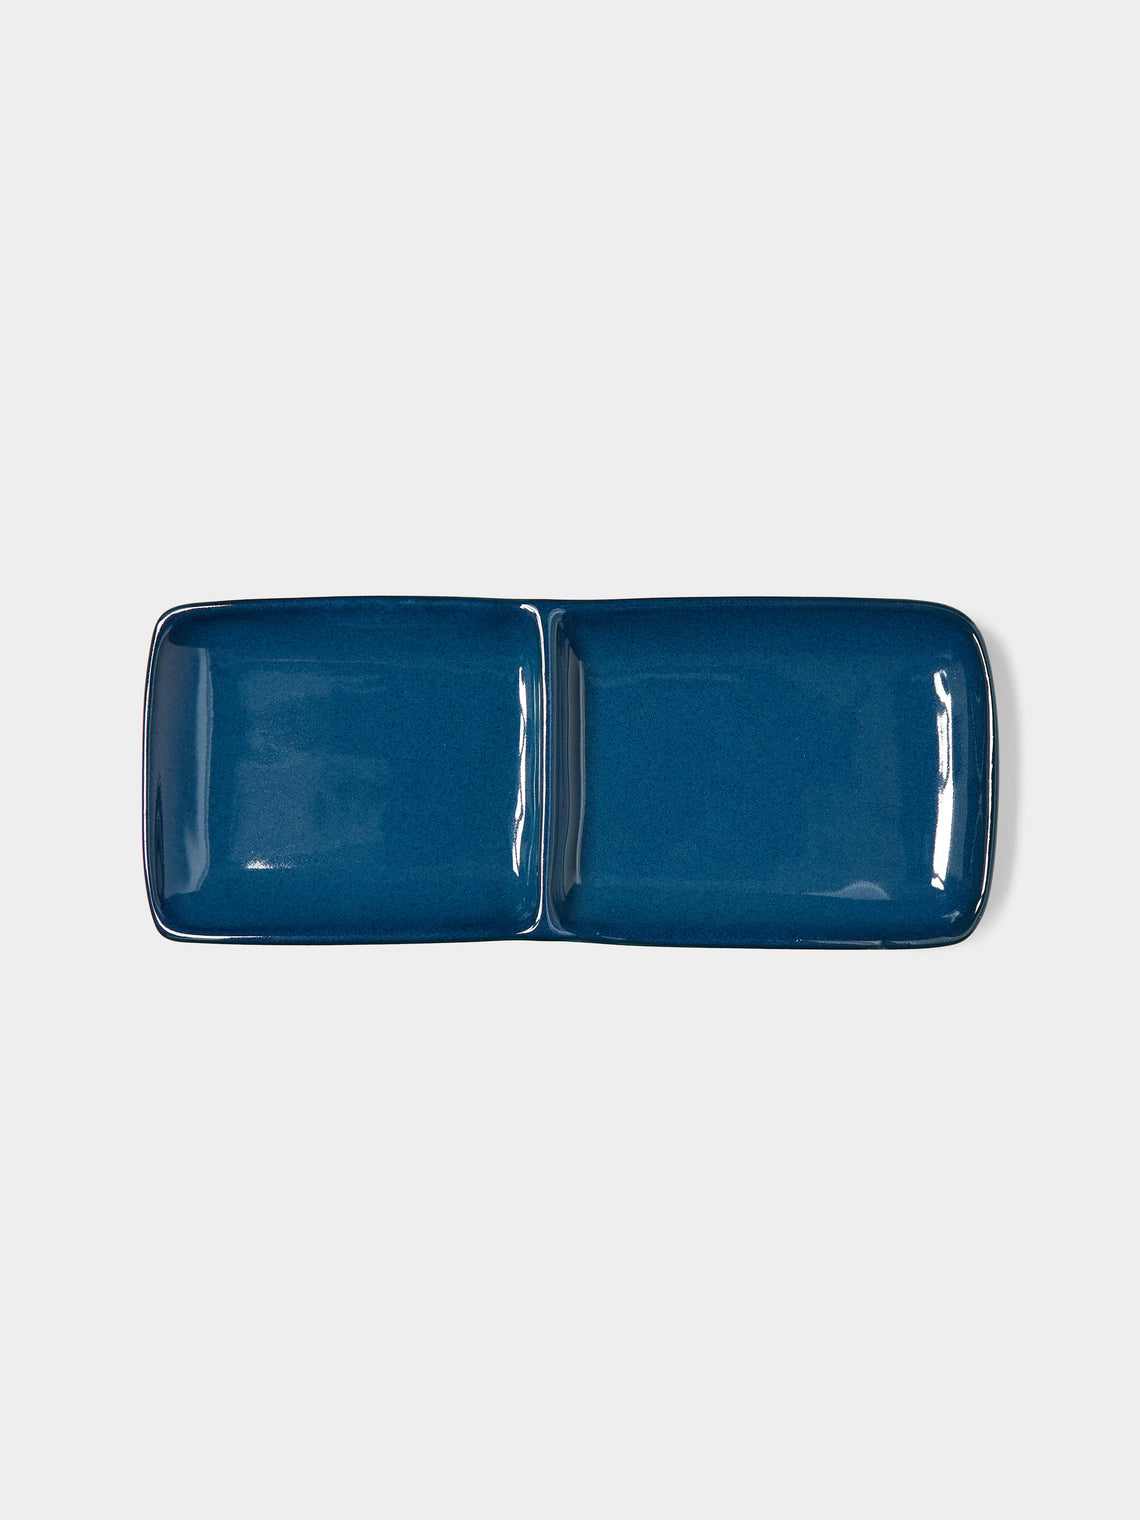 Mervyn Gers Ceramics - Hand-Glazed Ceramic Bento Boxes (Set of 2) - Blue - ABASK - 